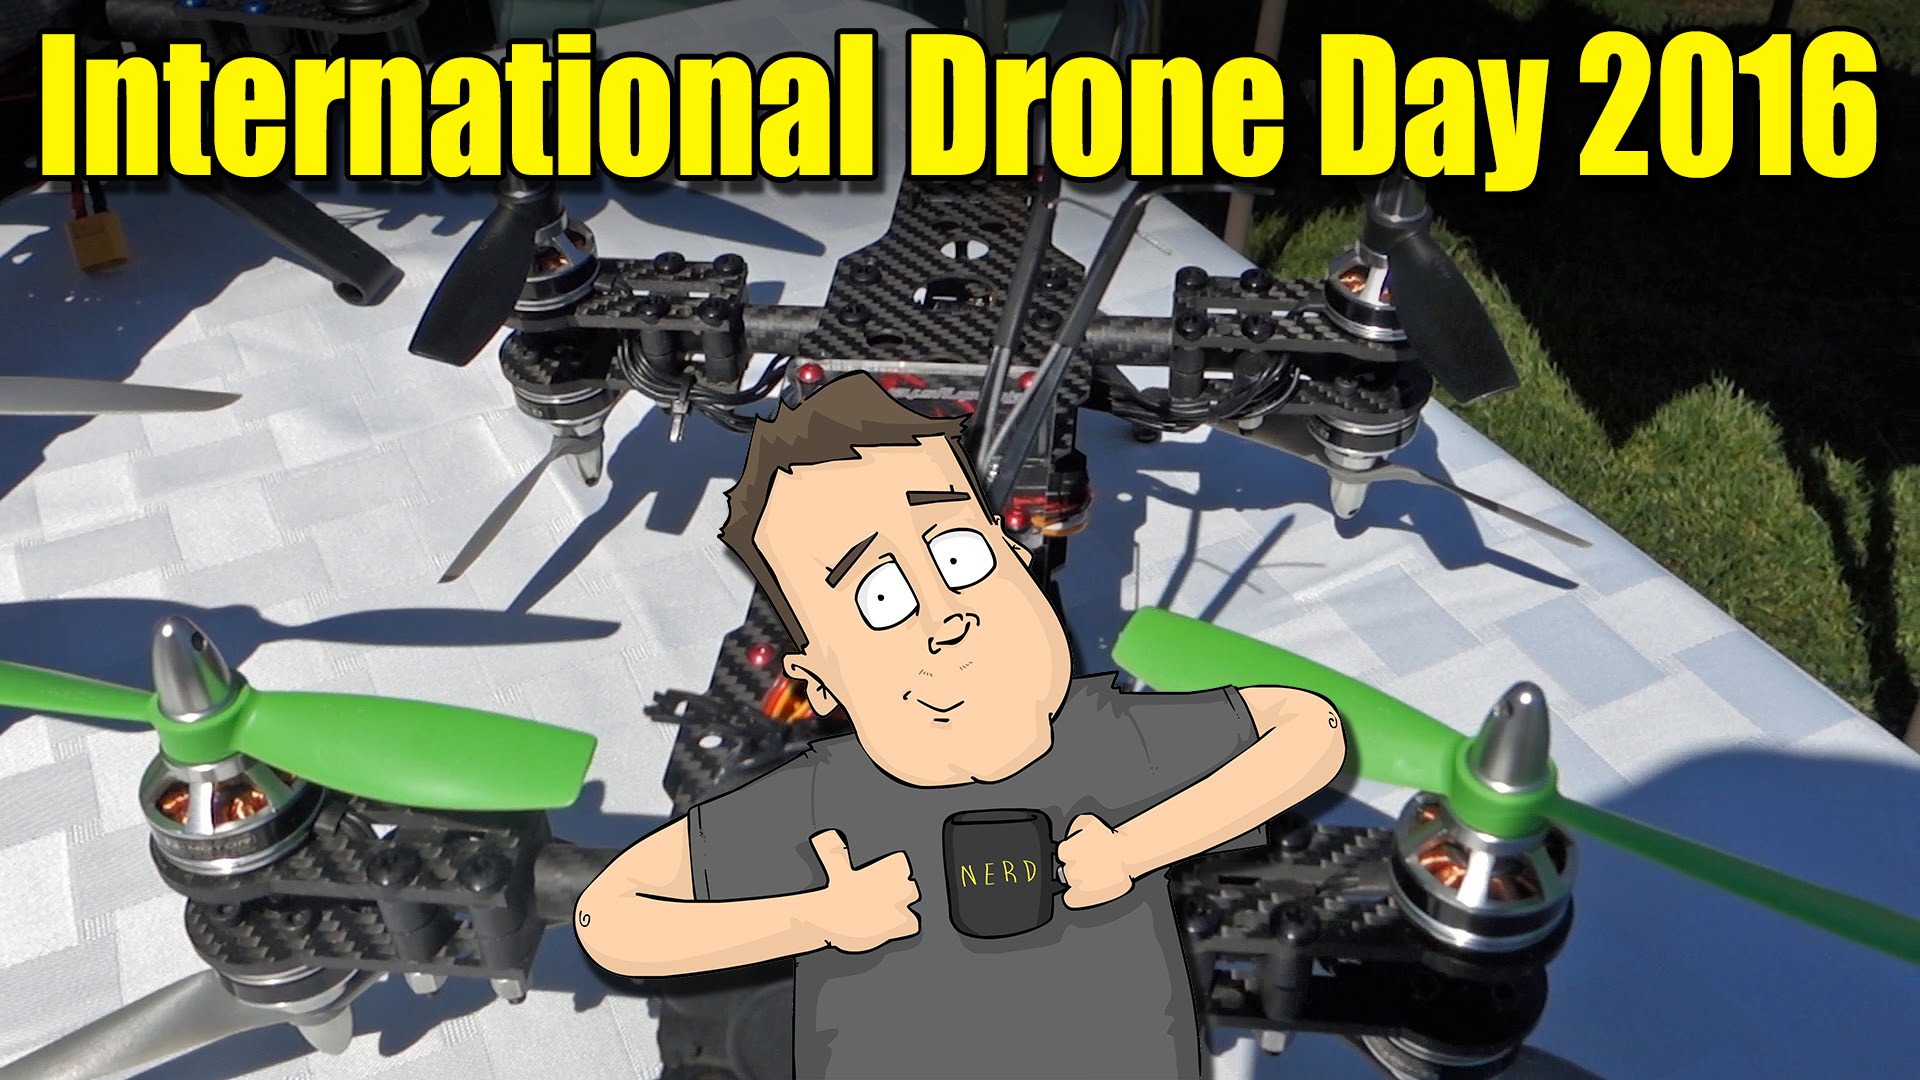 FPV Drone Racing, Demos More International Drone Day 2016